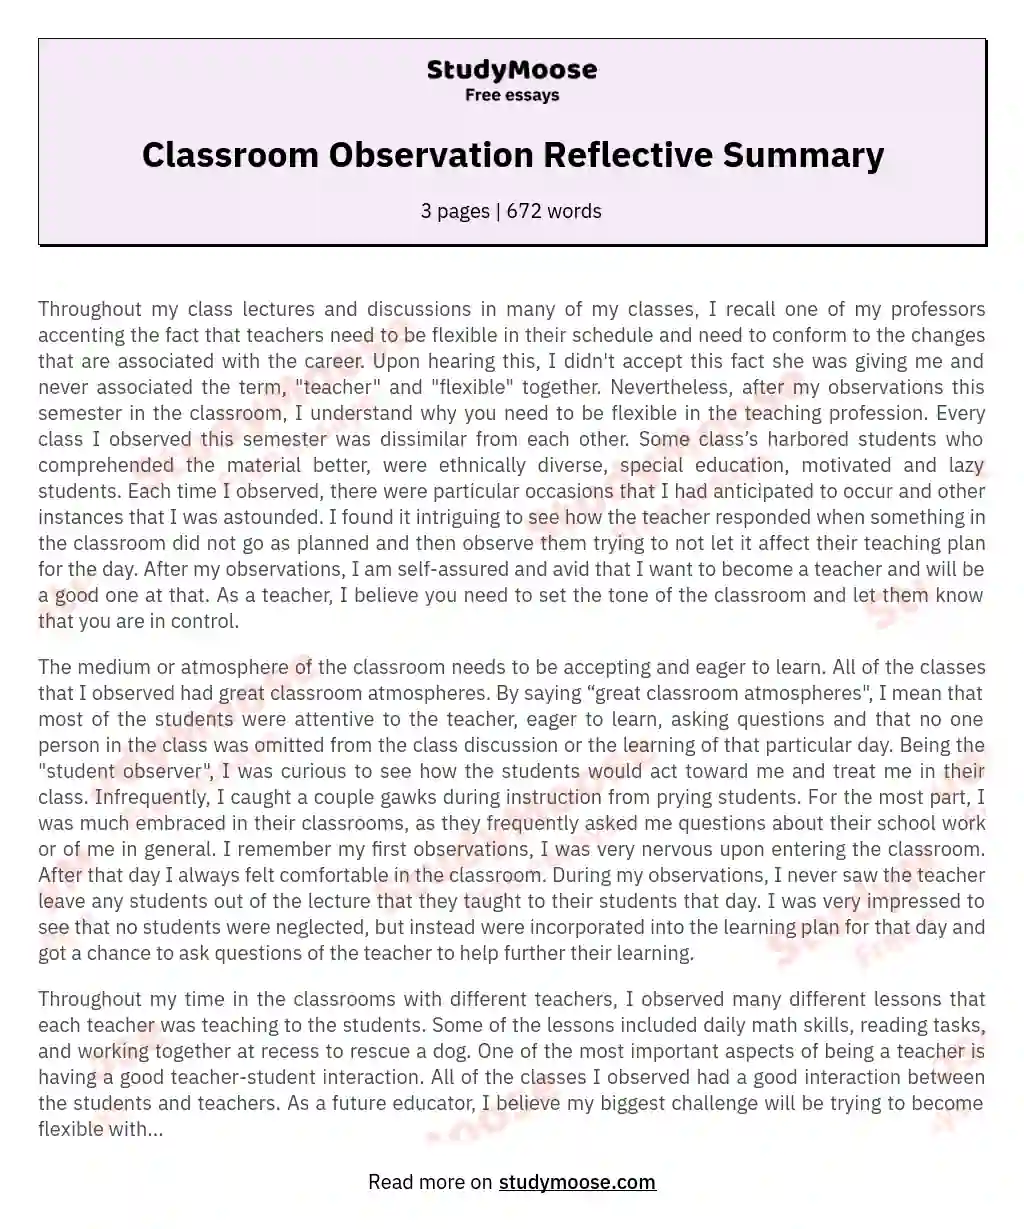 Classroom Observation Reflective Summary essay